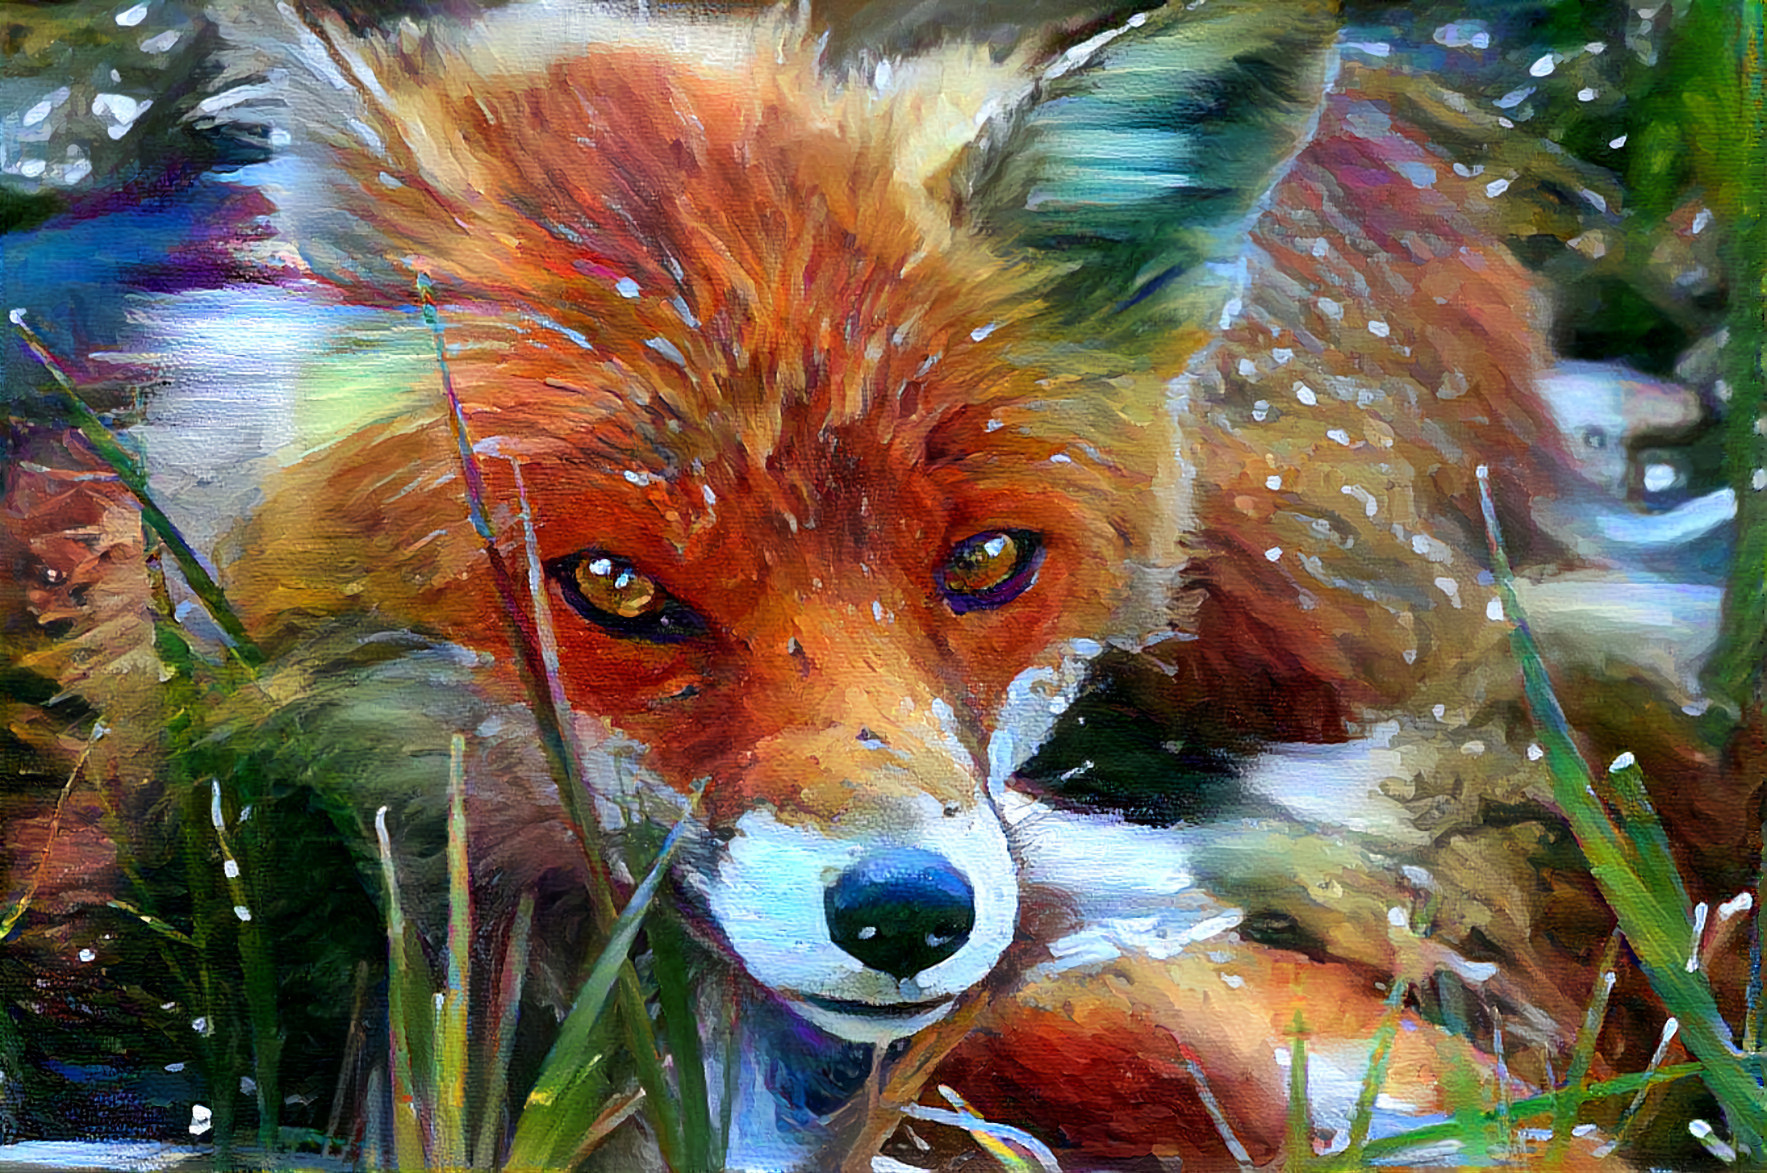 Red Fox In Grass